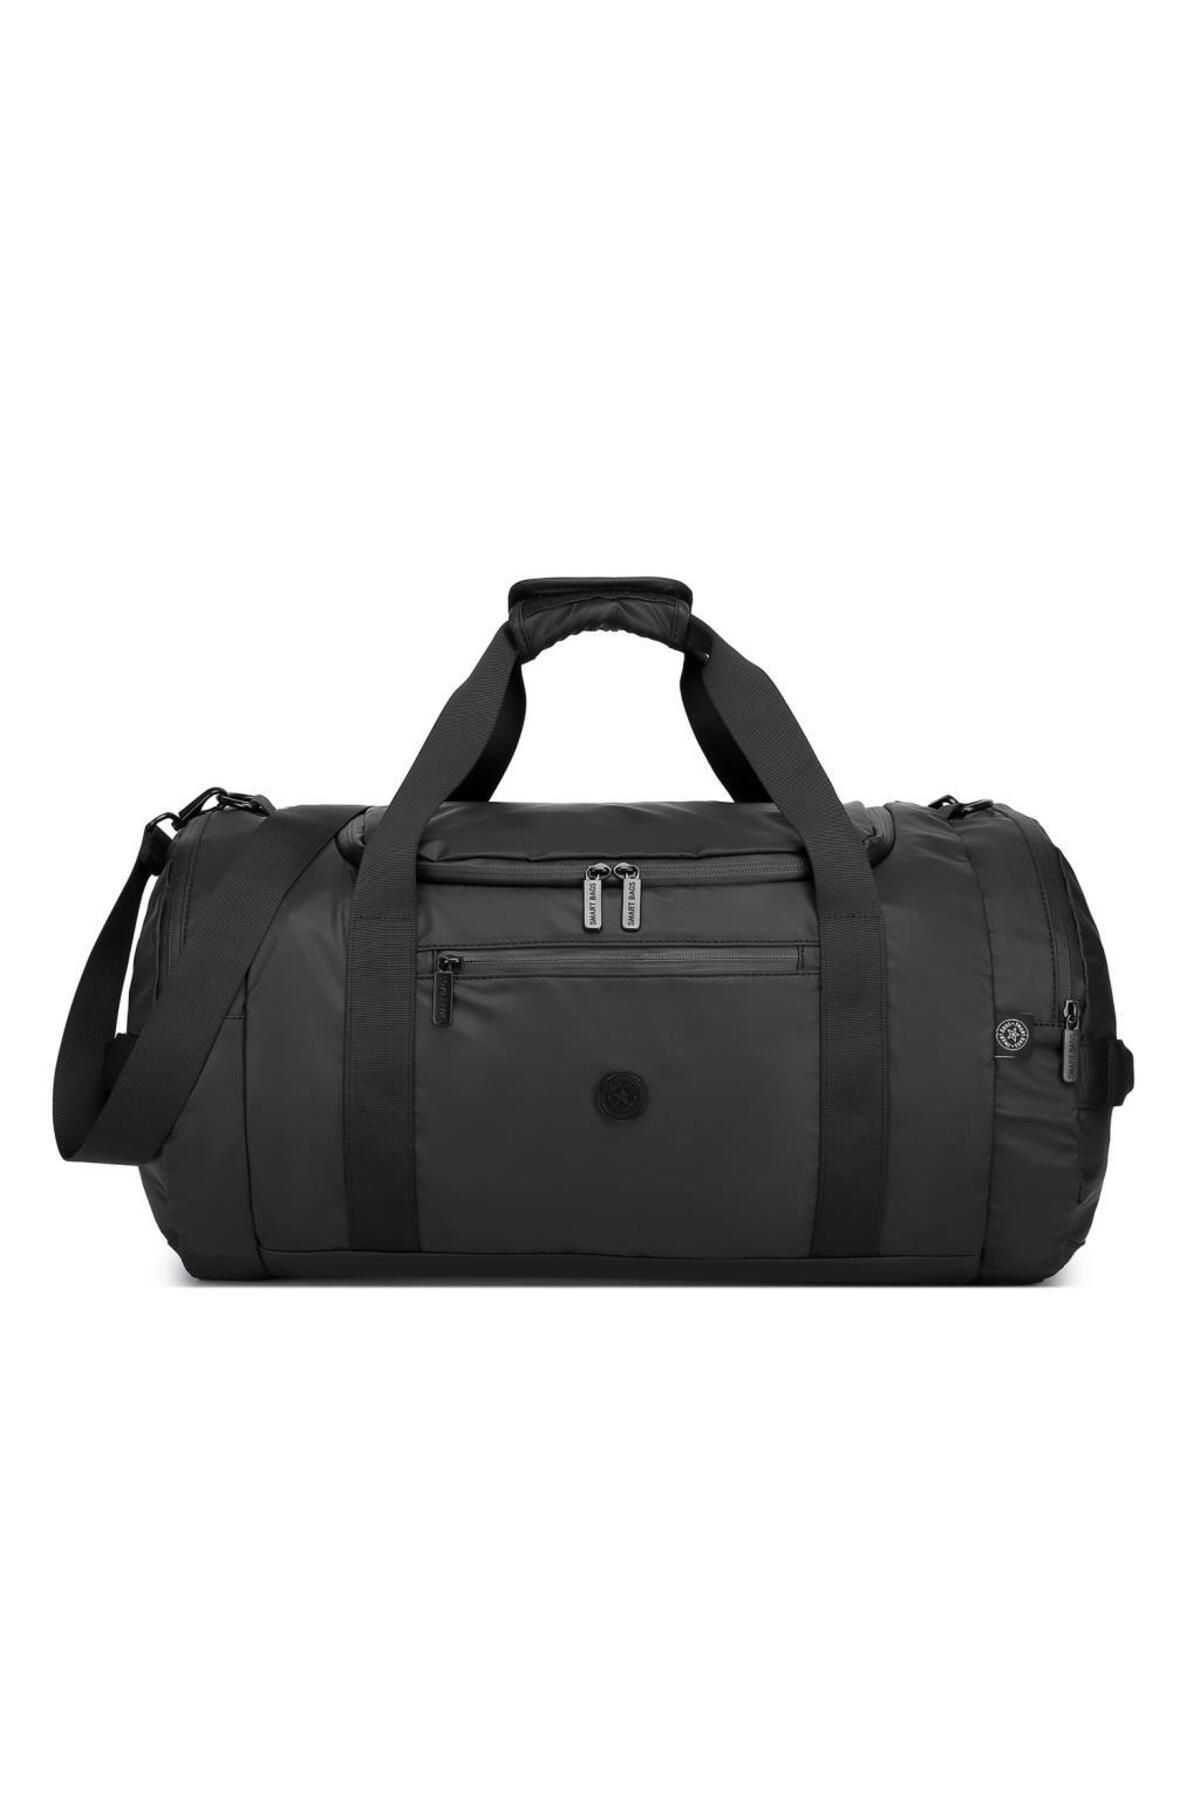 Smart Bags Gumi Kumaş Smart Bags Uniseks Spor Seyahat Çantası 8699